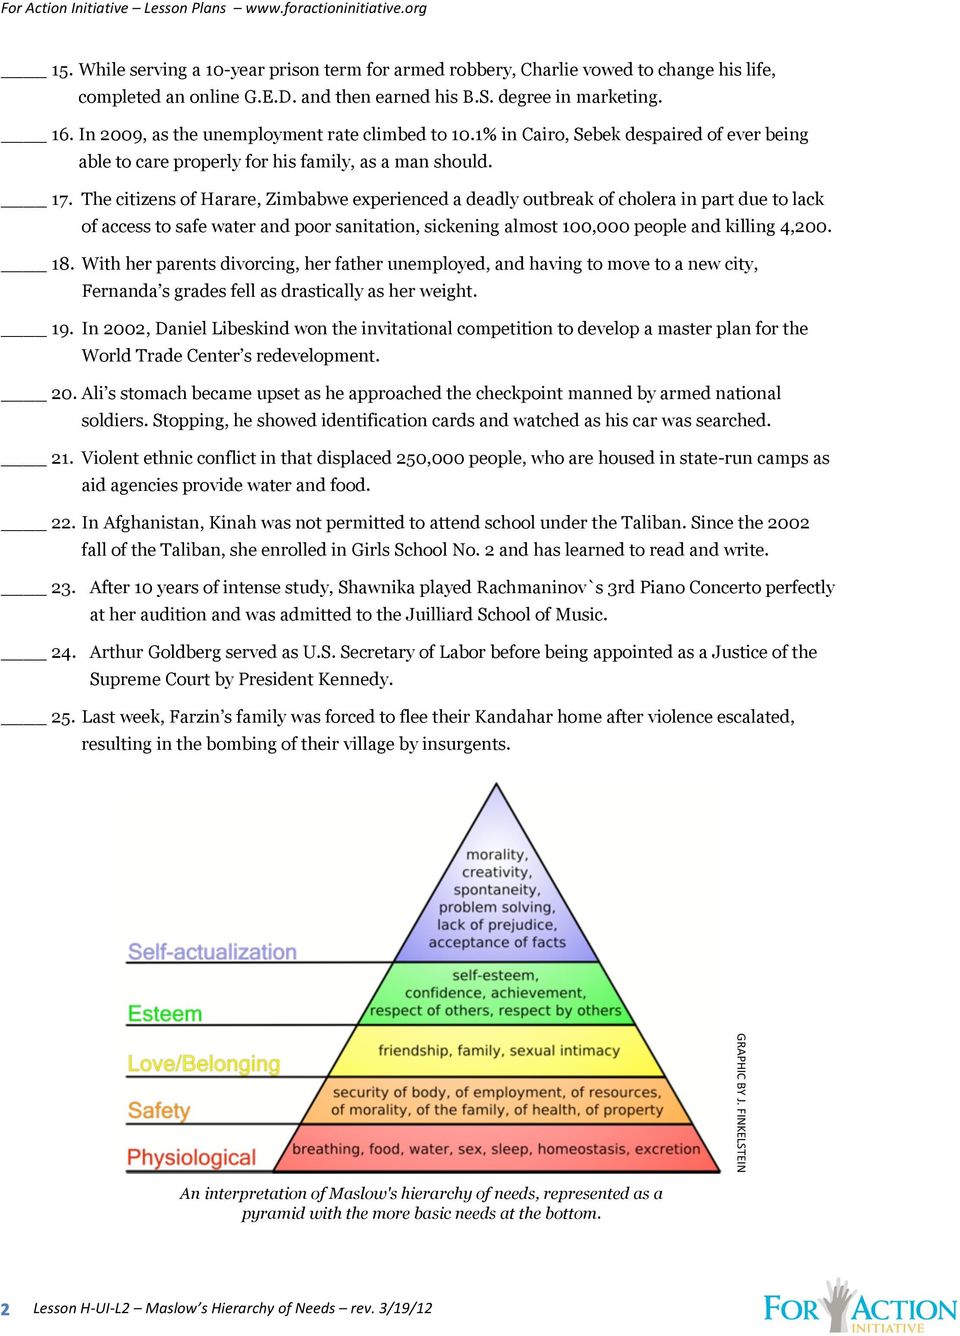 Maslows Hierarchy Of Needs Worksheet Pdf renewhuge